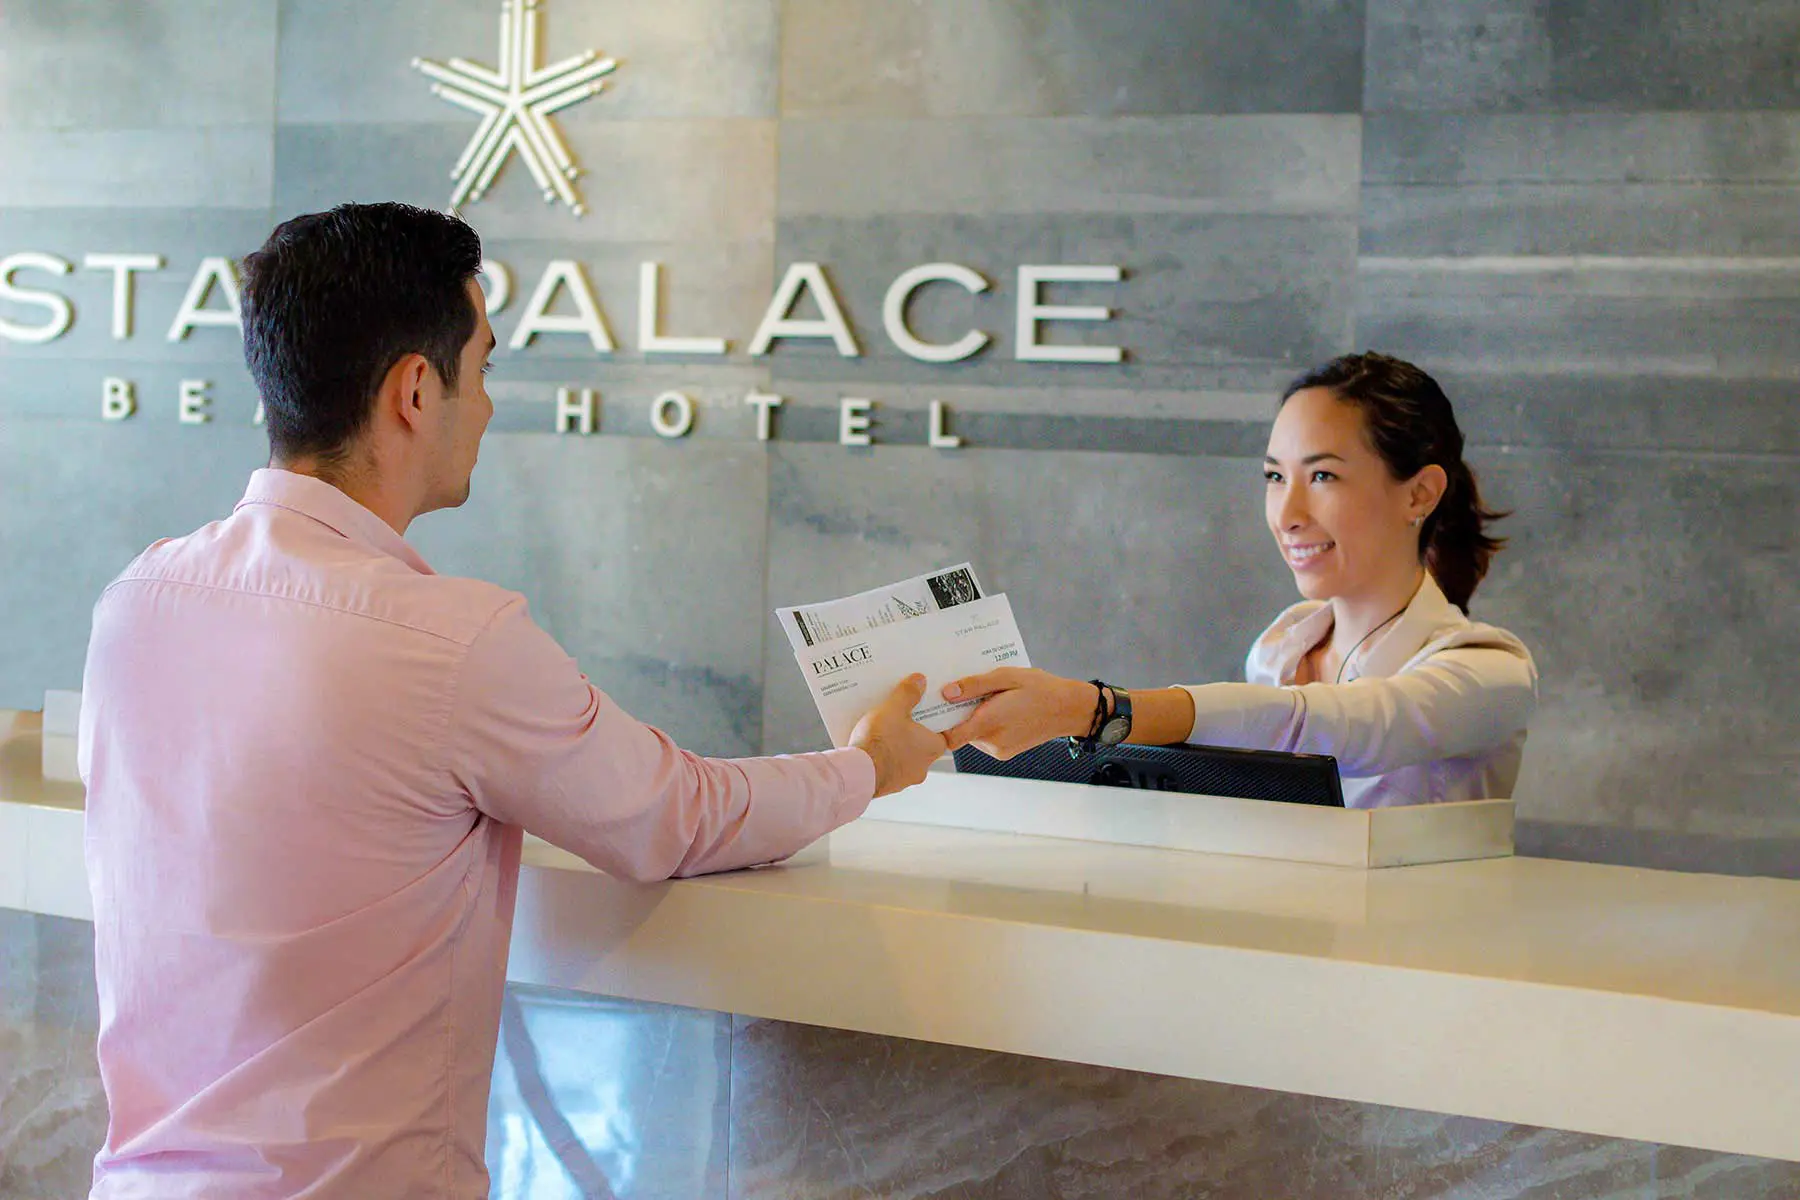 Recepción de Hotel Star Palace, Mazatlán